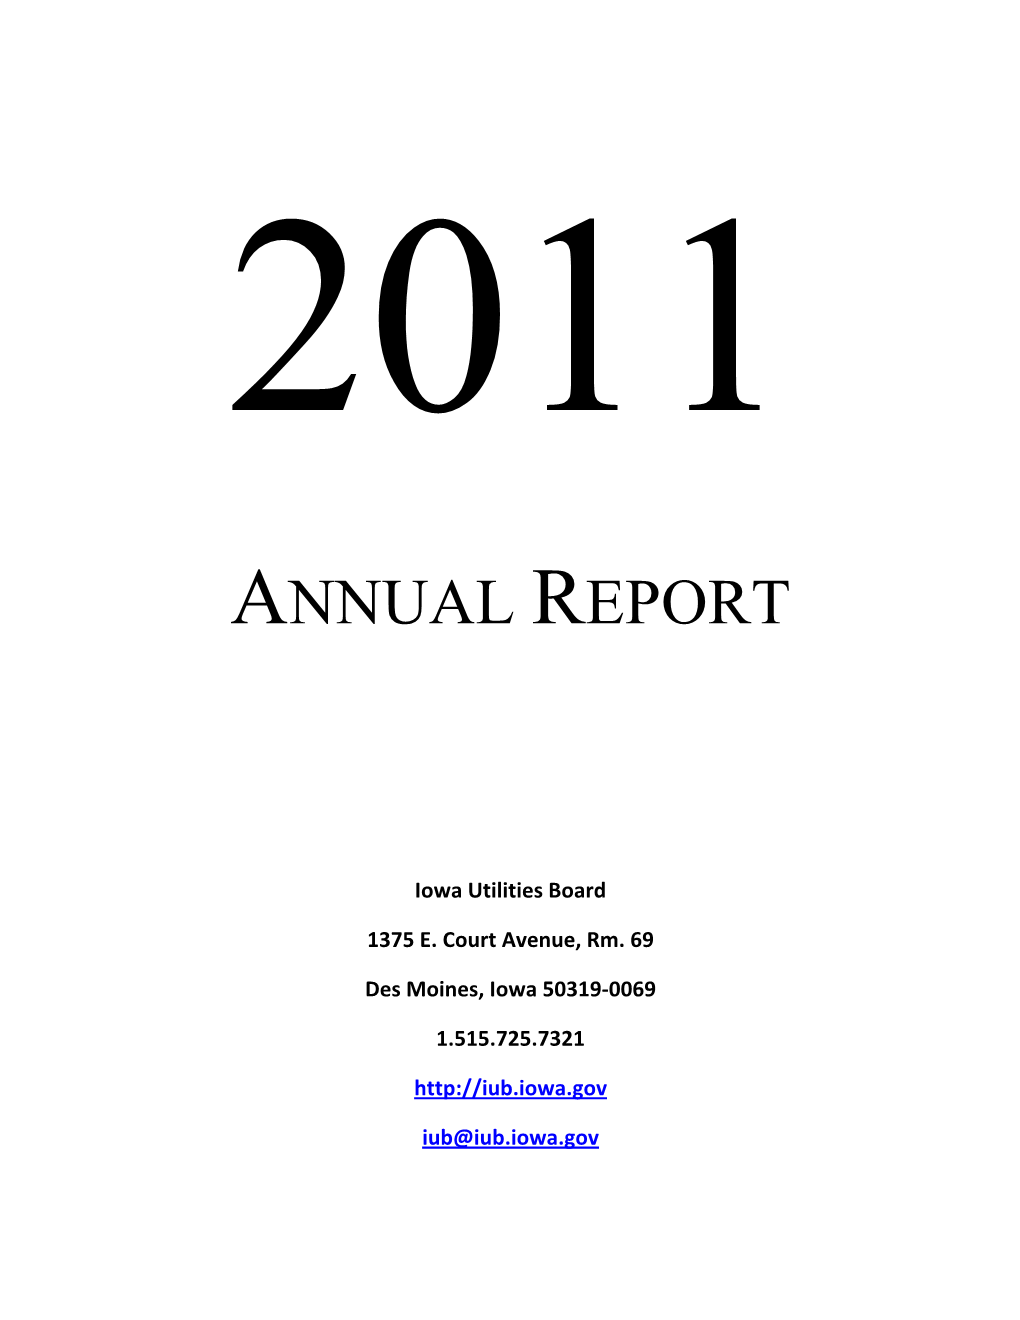 Calendar Year 2011 Annual Report of the Iowa Utilities Board